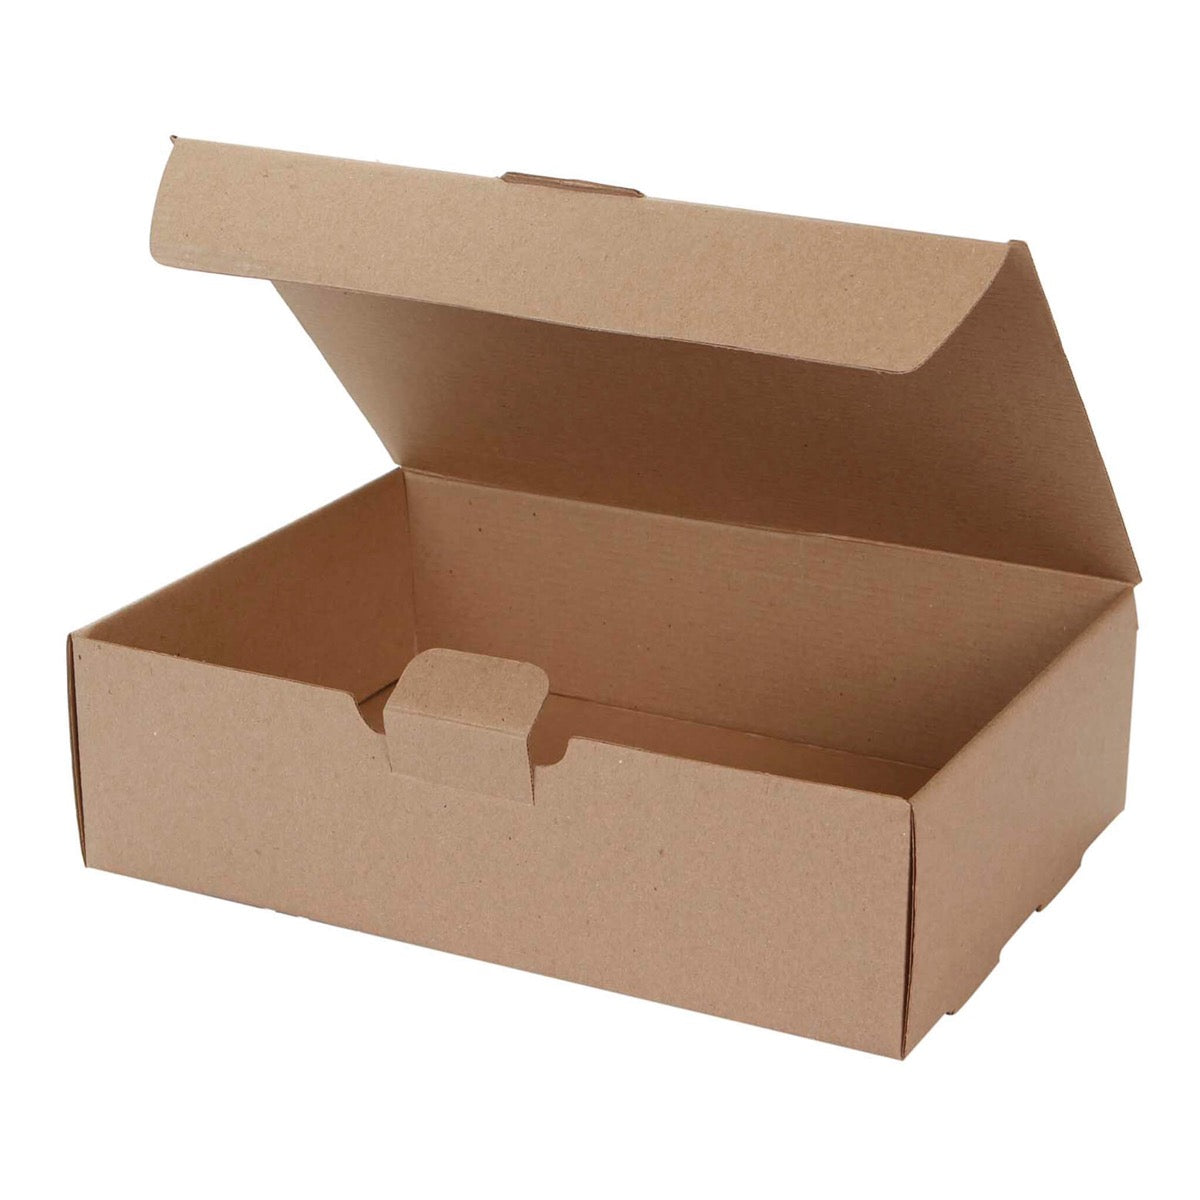 Cajas para envíos alargadas  Caja de cartón, Cajas, Cartón